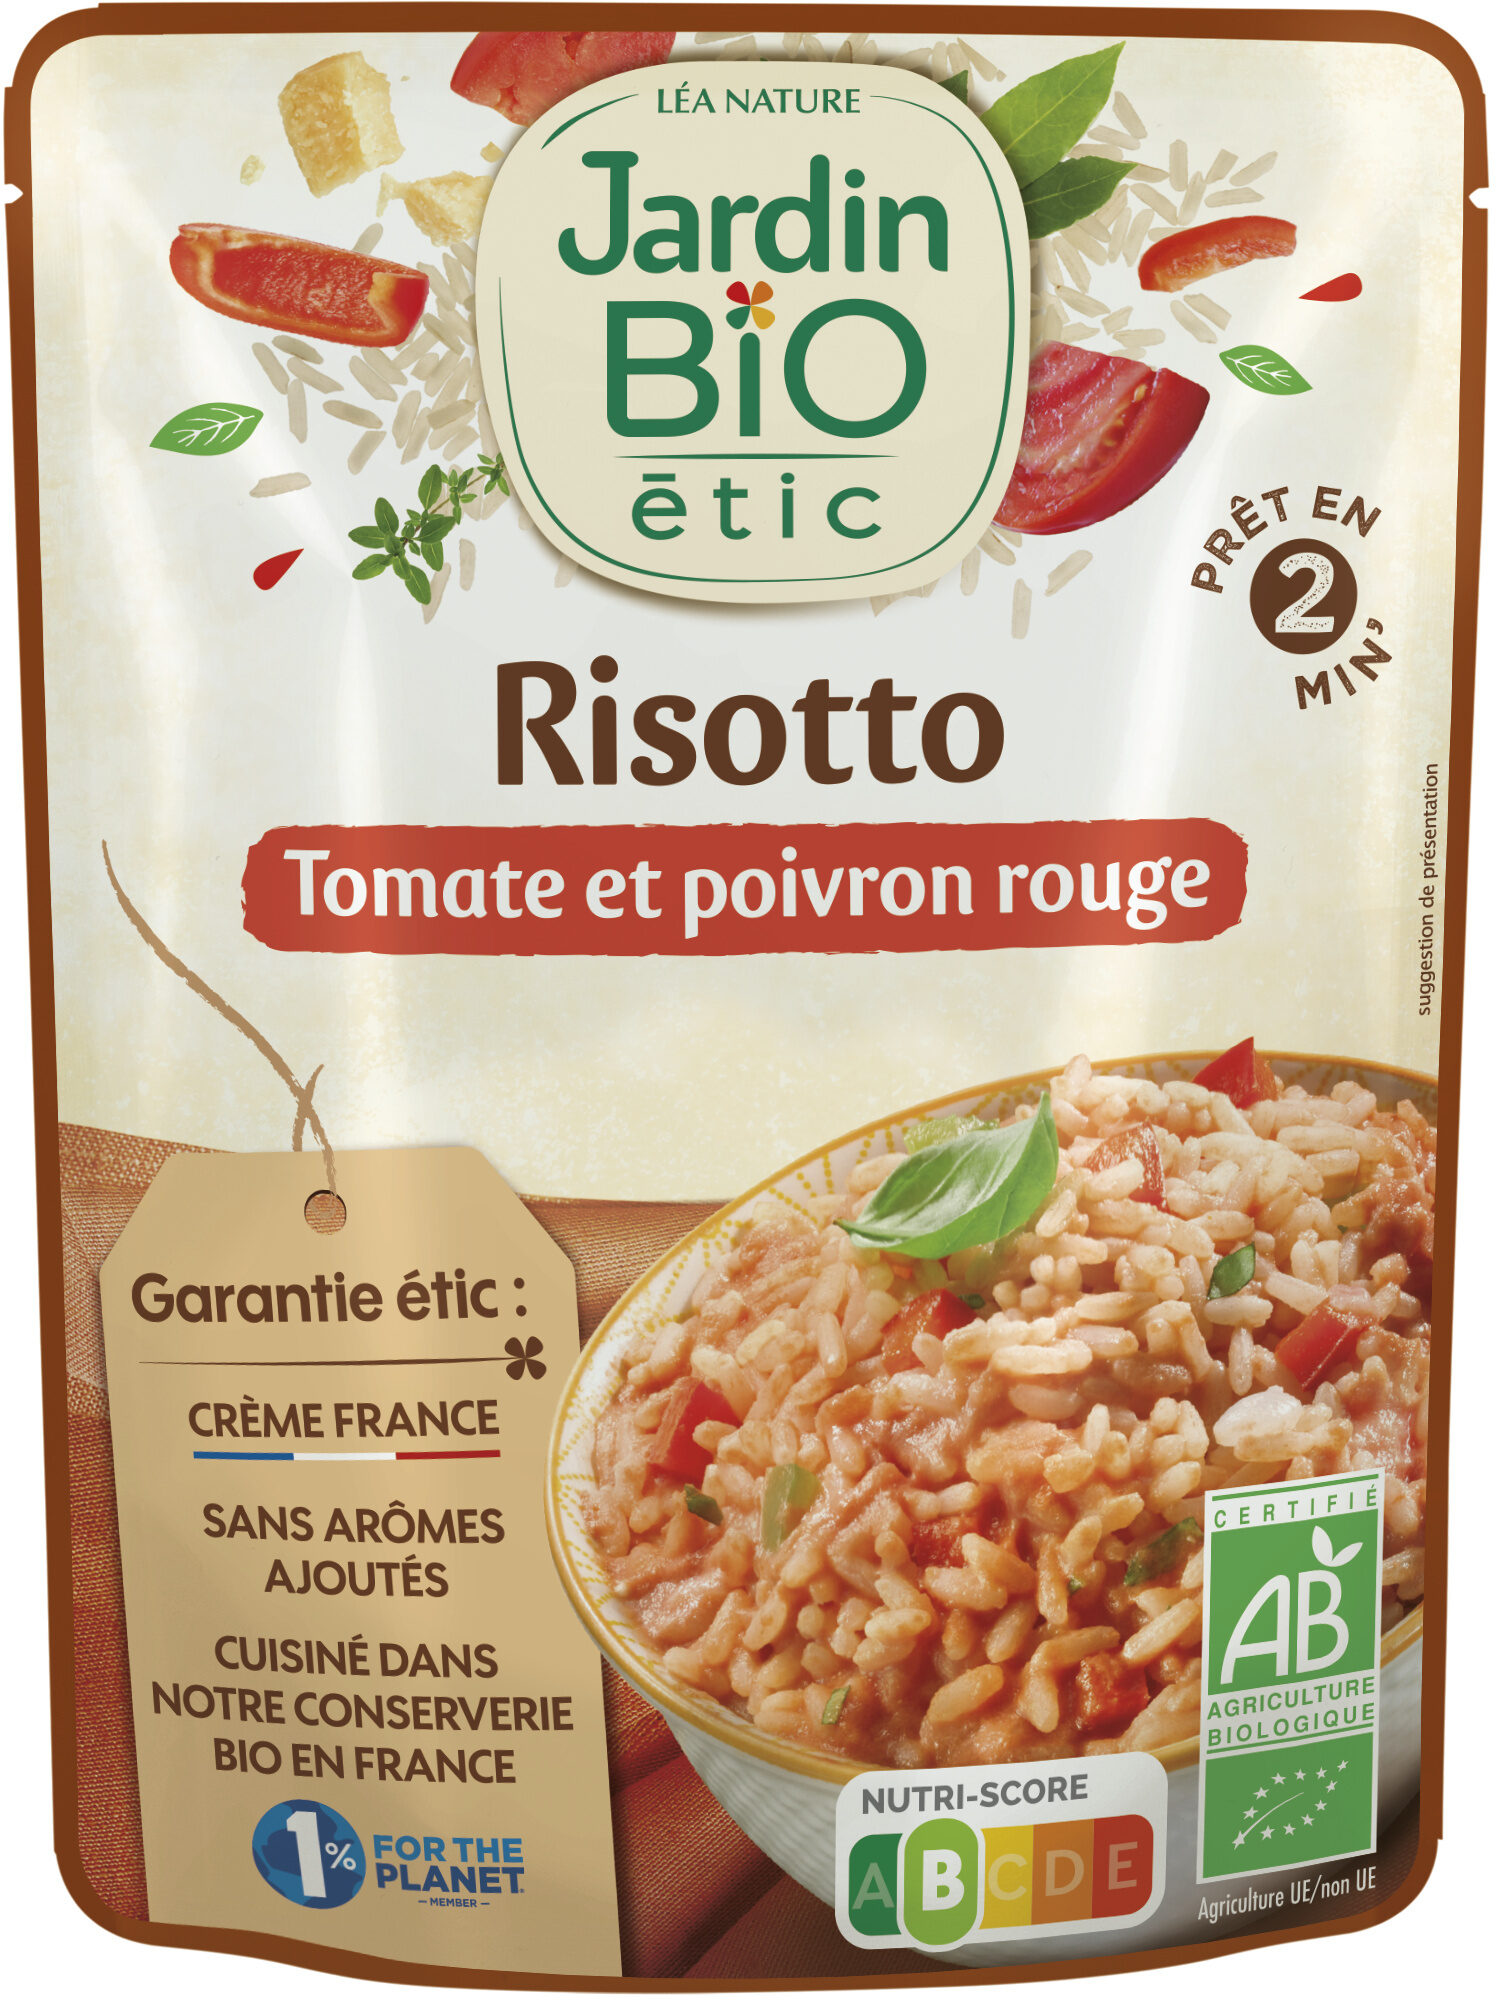 Risotto tomate et poivron rouge - Product - fr